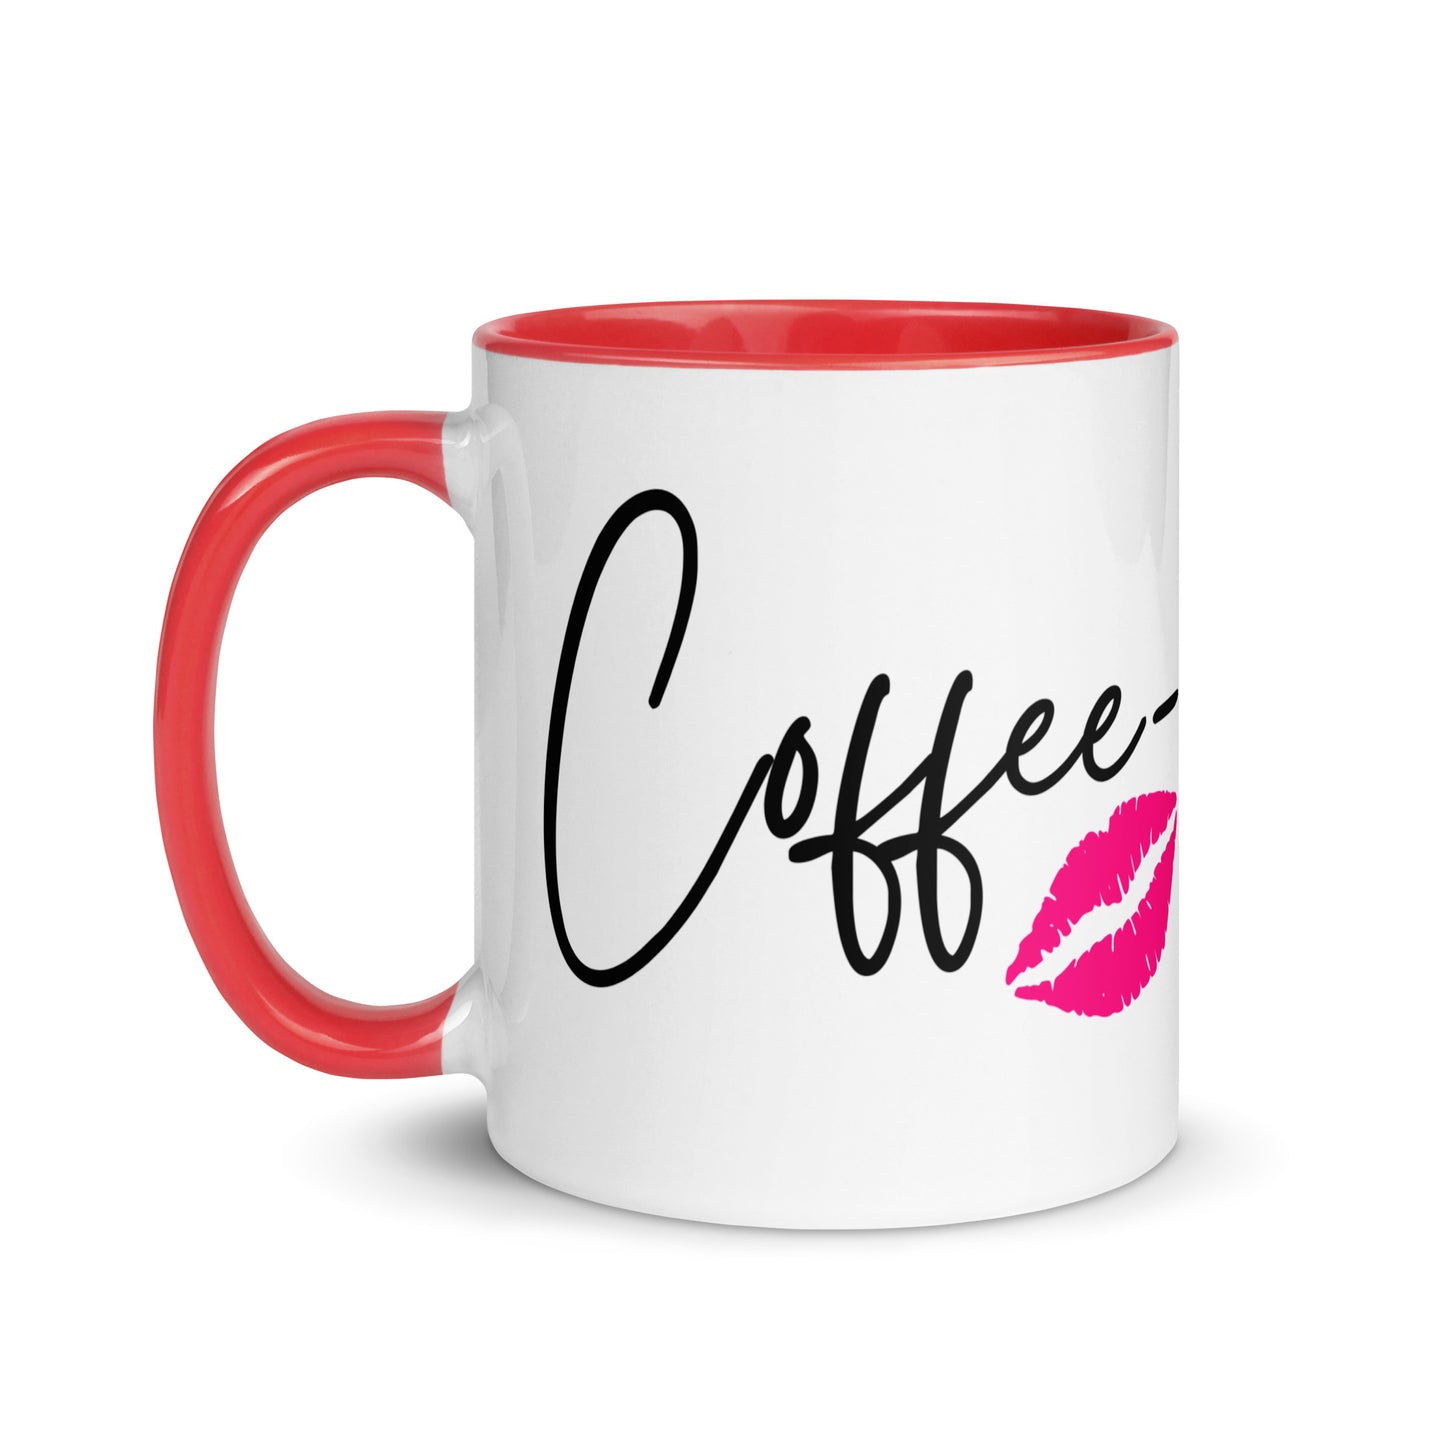 Coffeespiration Mug with Color Inside